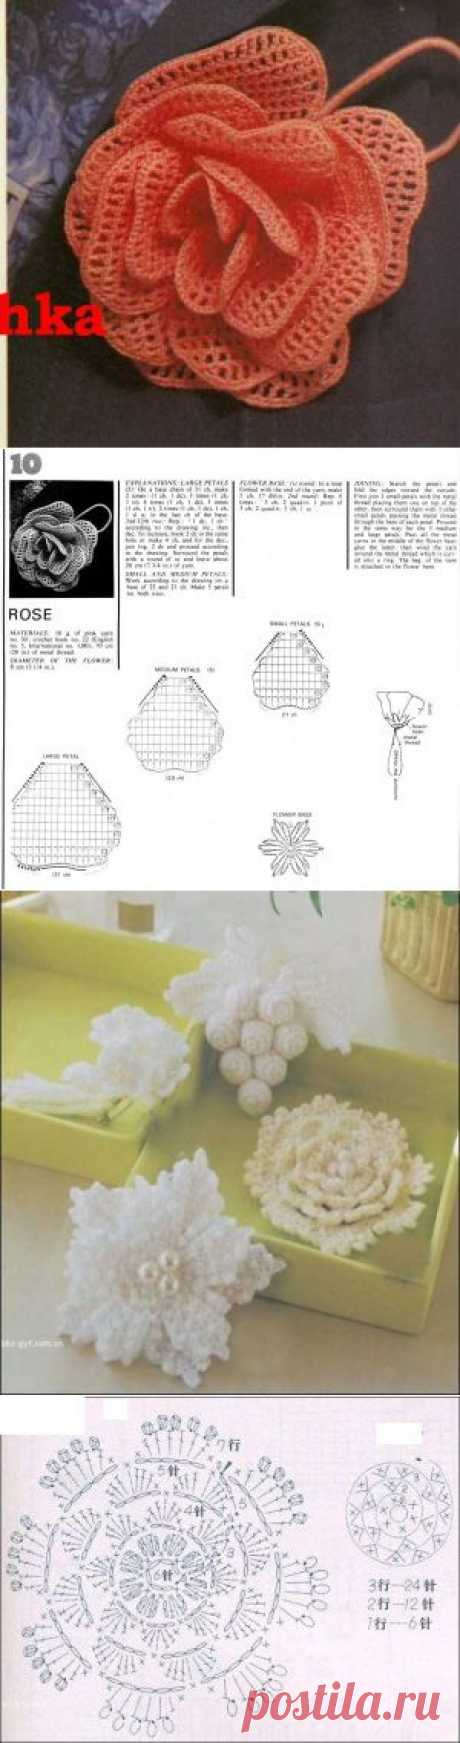 crochet flower: more patterns and diagrams - crafts ideas - crafts for kids
красивые цветы крючком